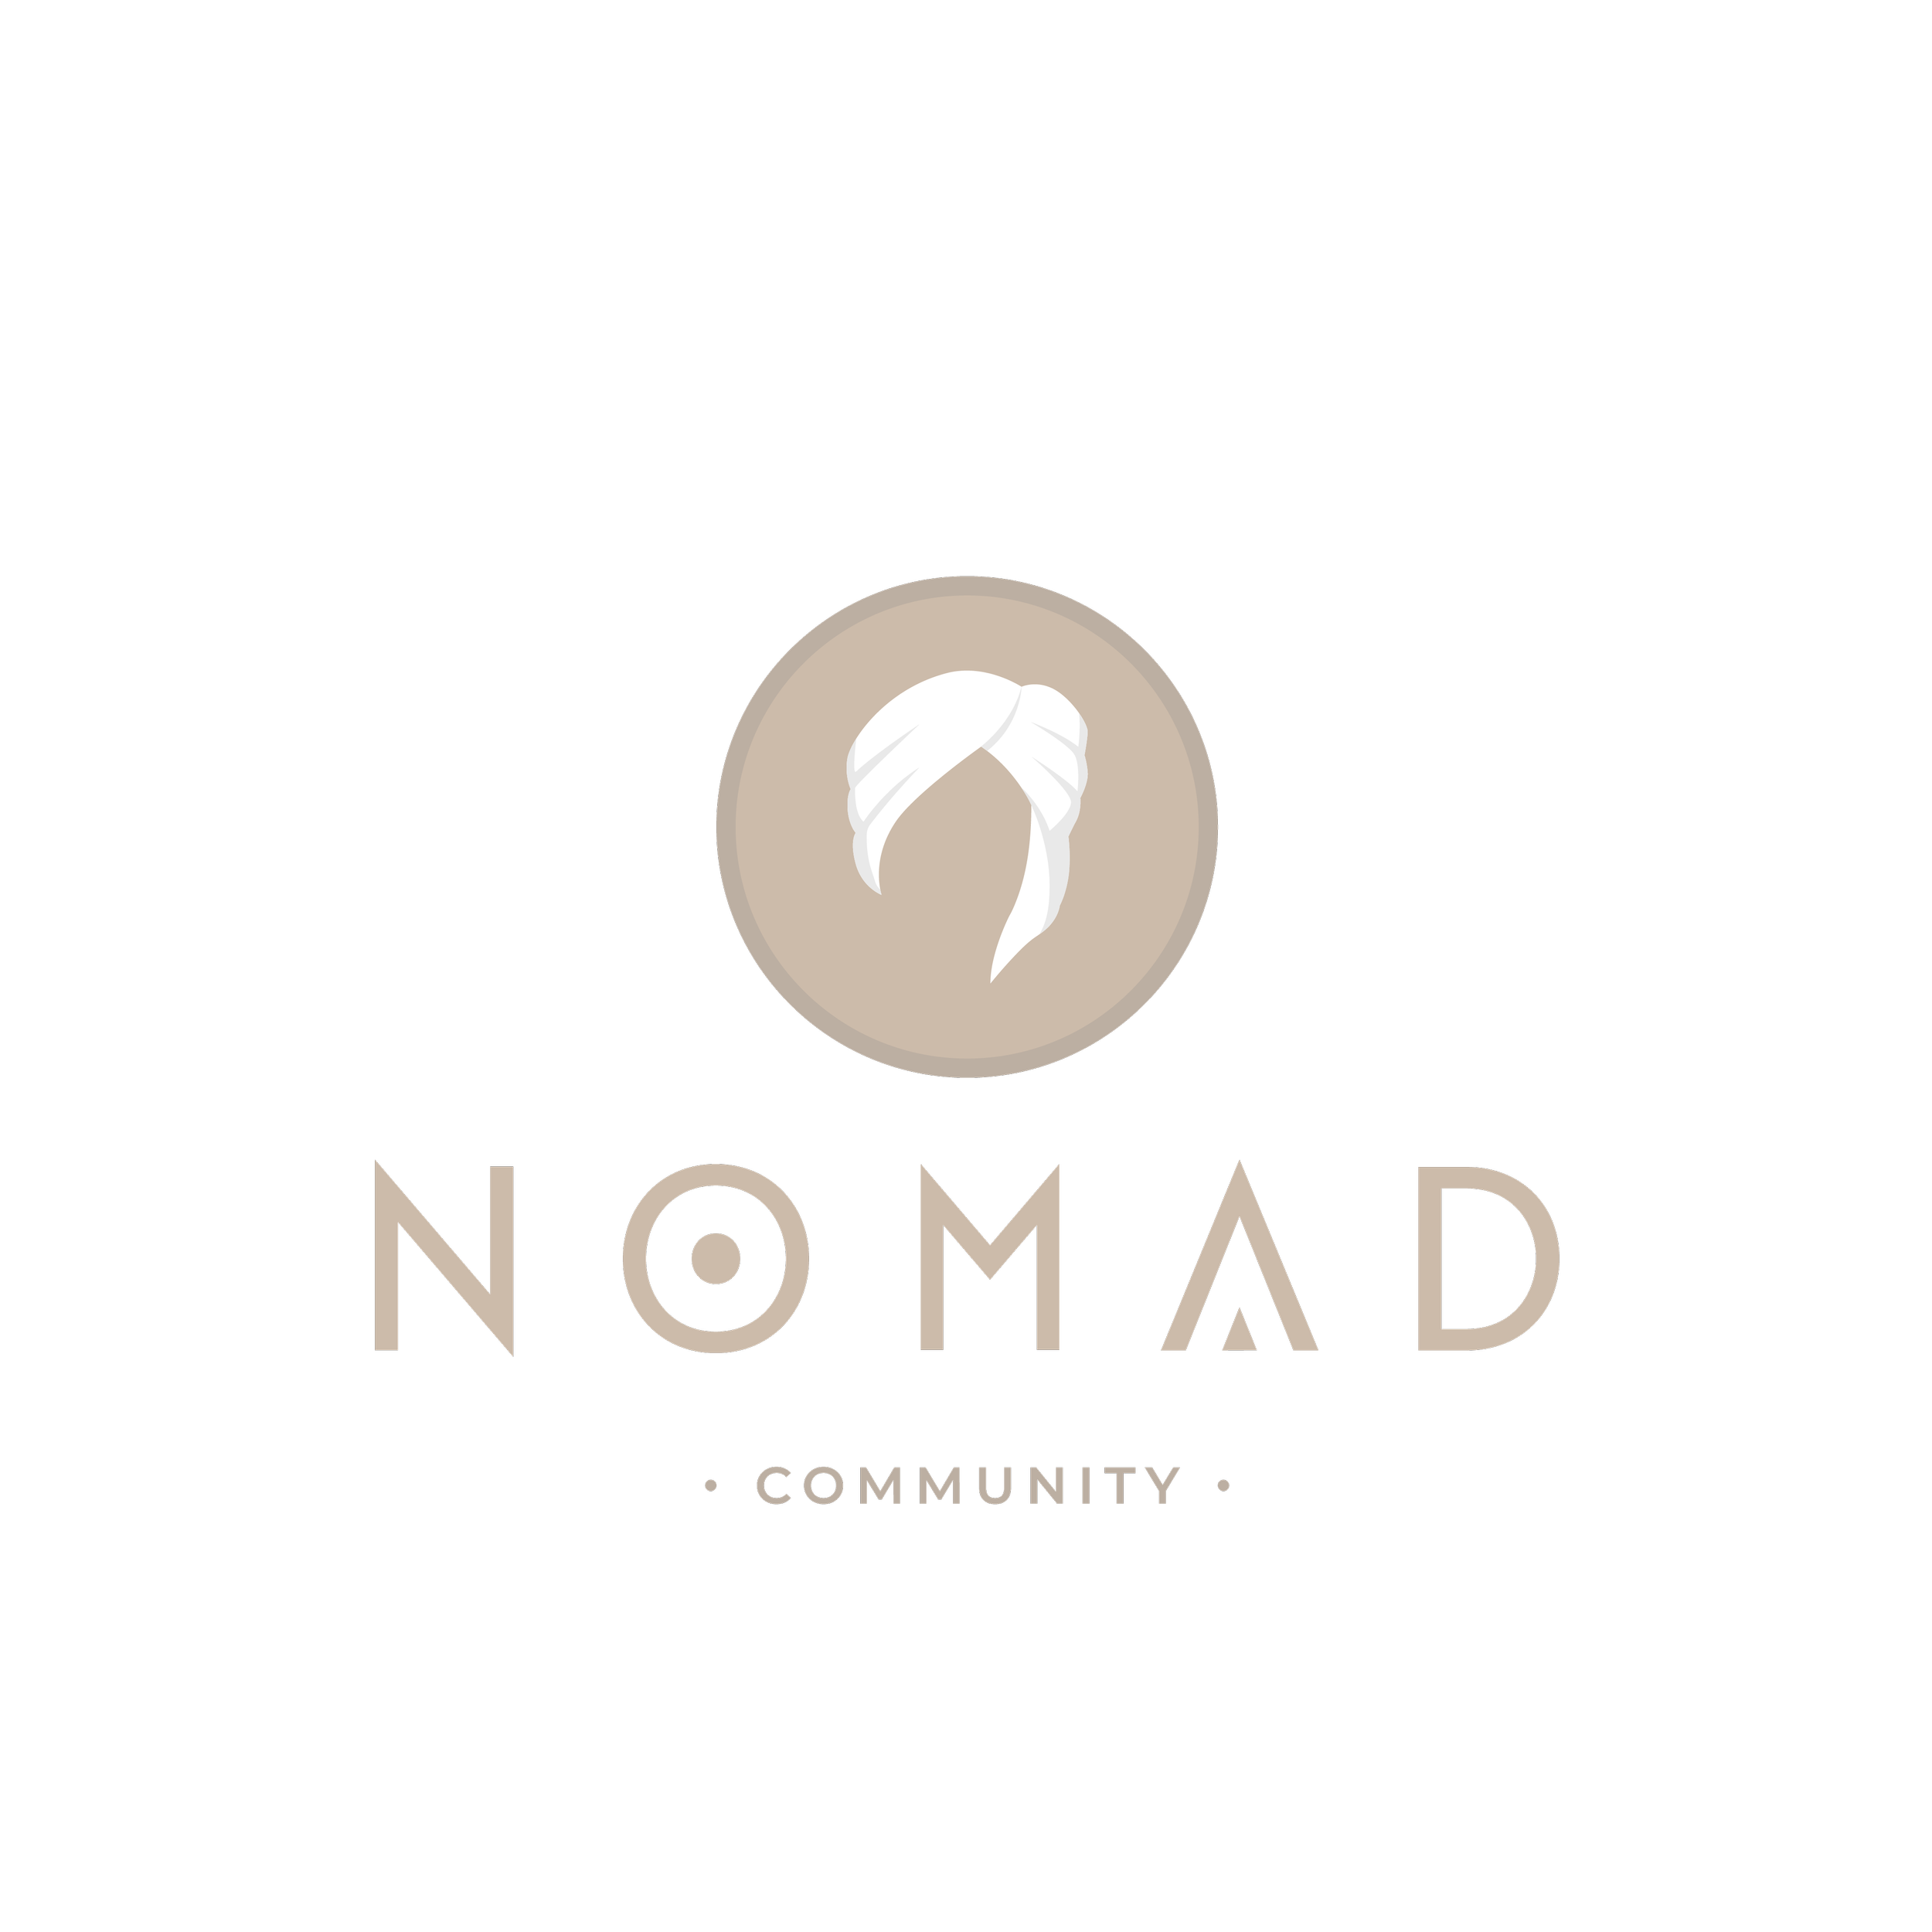 logo nomad transpa.png